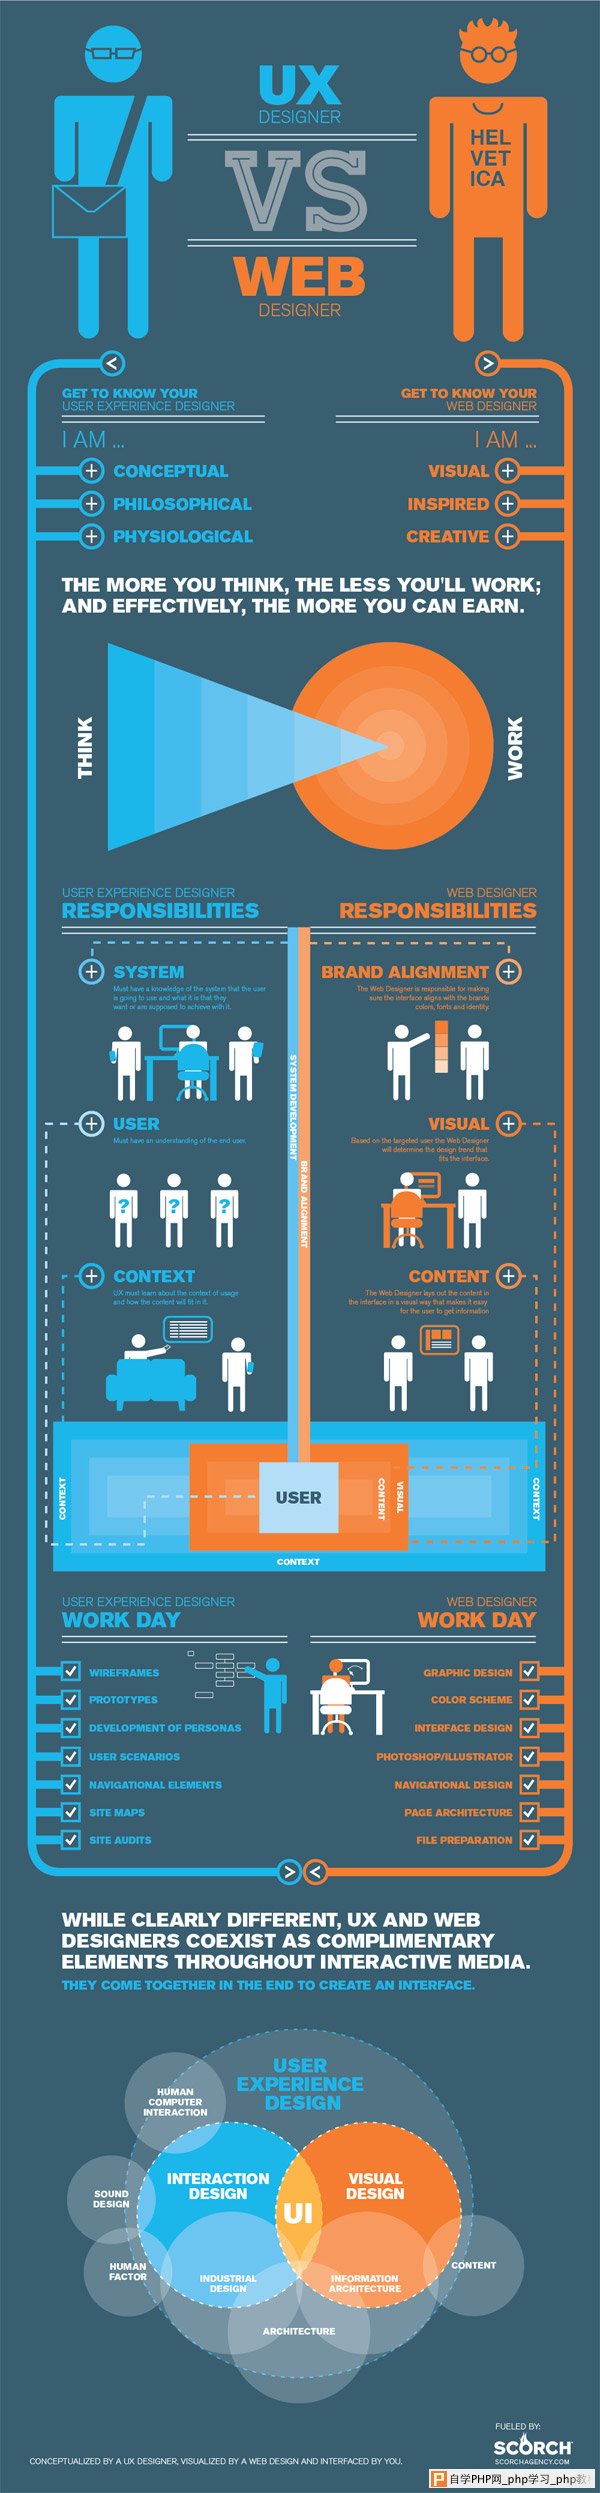 UX Designers vs Web Designers by Designbeep